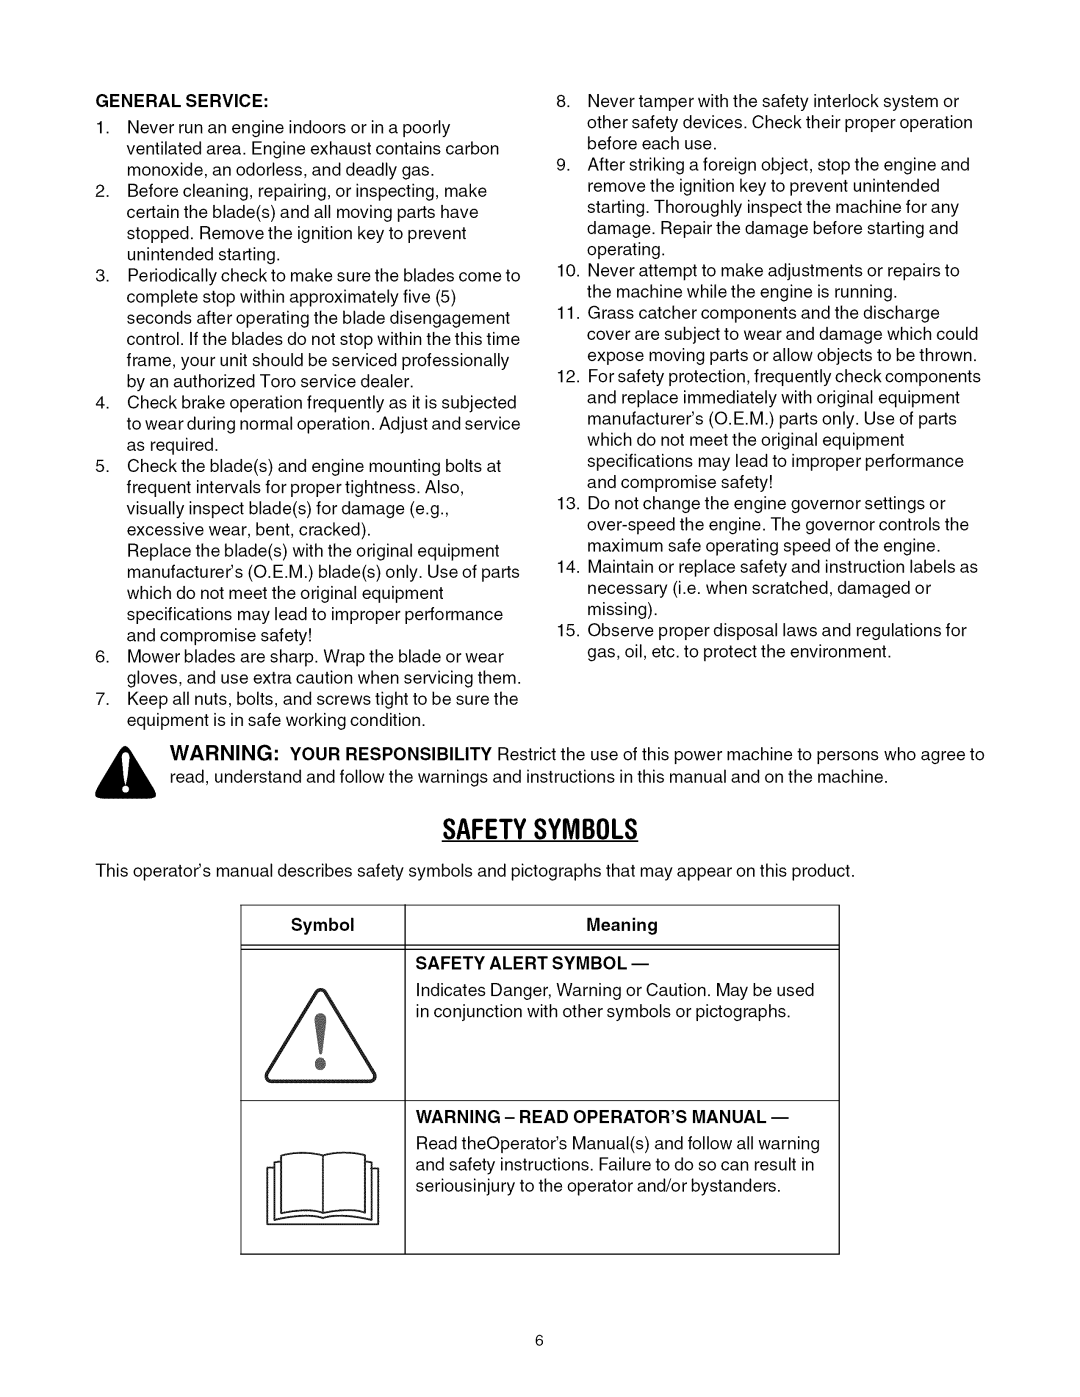 Toro 13AX60RG744, 13AX60RH744 manual Safetysymbols, Warning - Read Operators Manual 